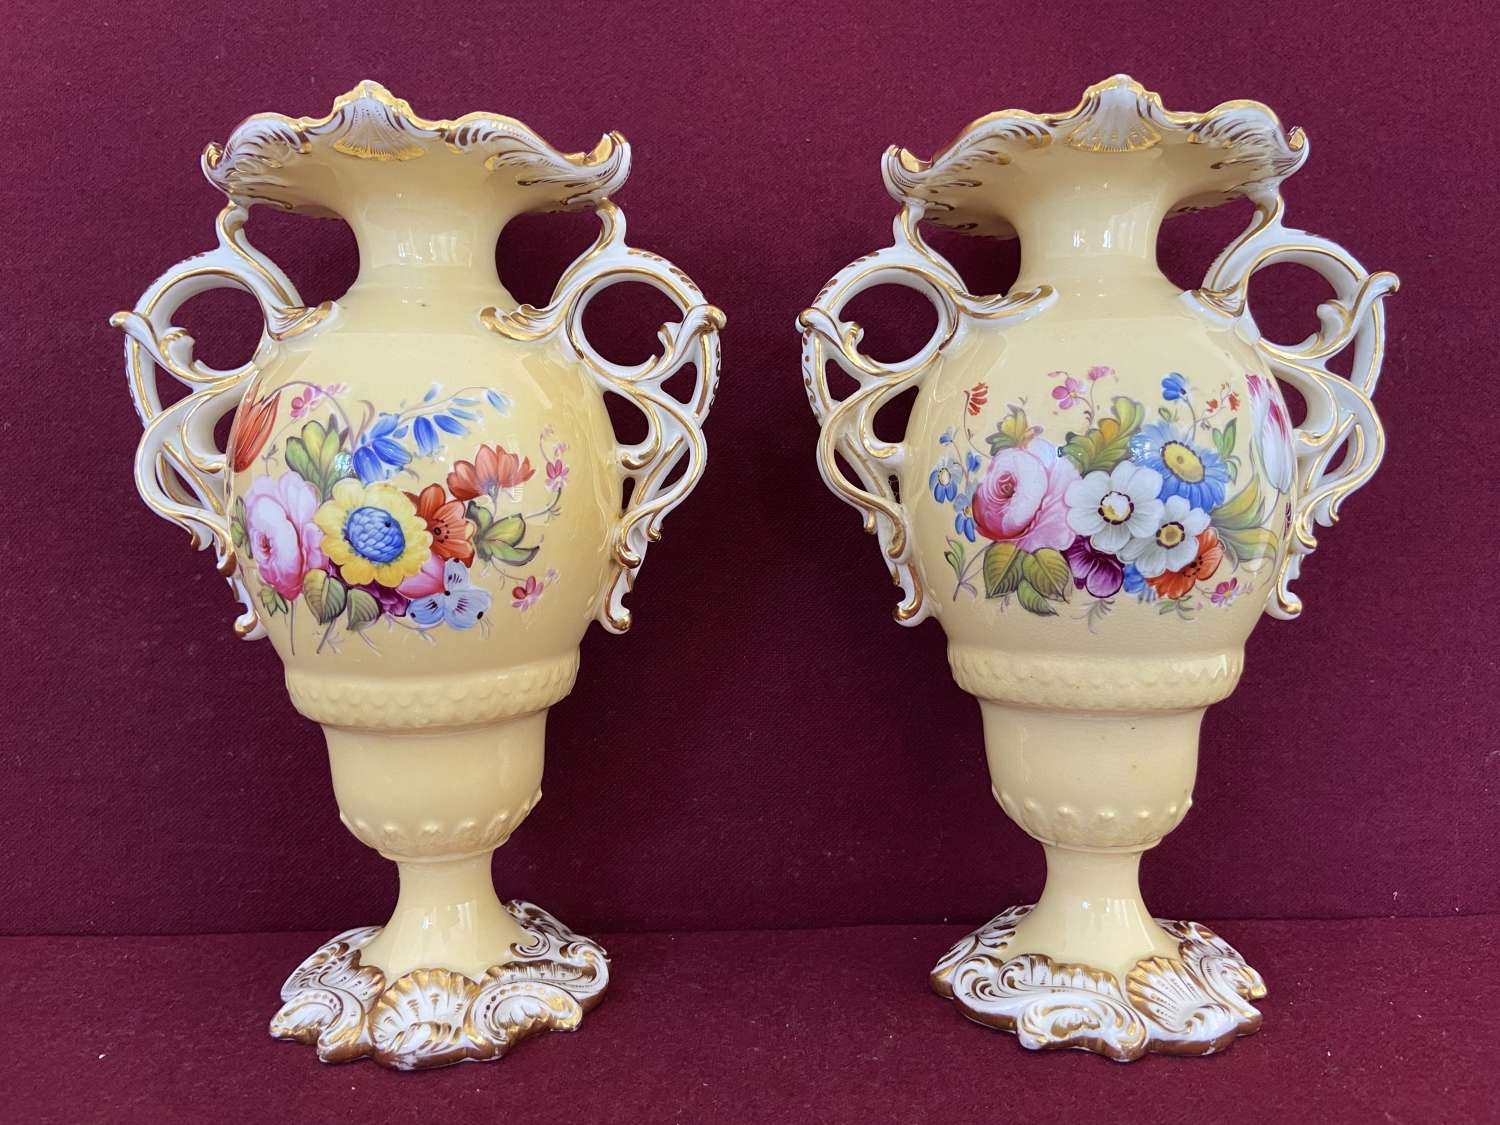 A Pair of Minton 'Flaxman' Vases c.1825-30